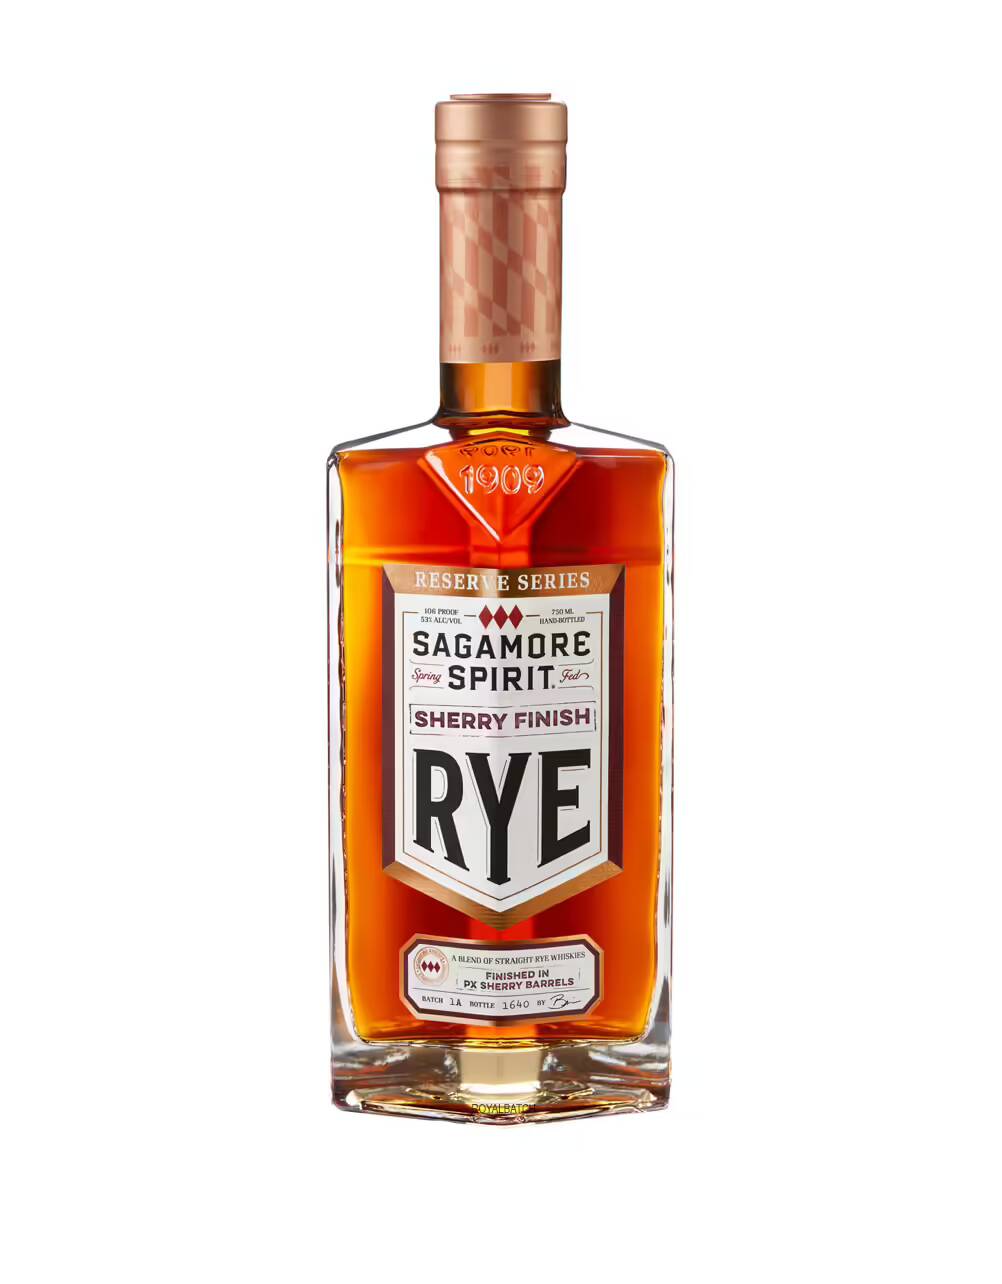 Sagamore Spirit Reserve Series Sherry Finish 6 Year Old Rye Whiskey